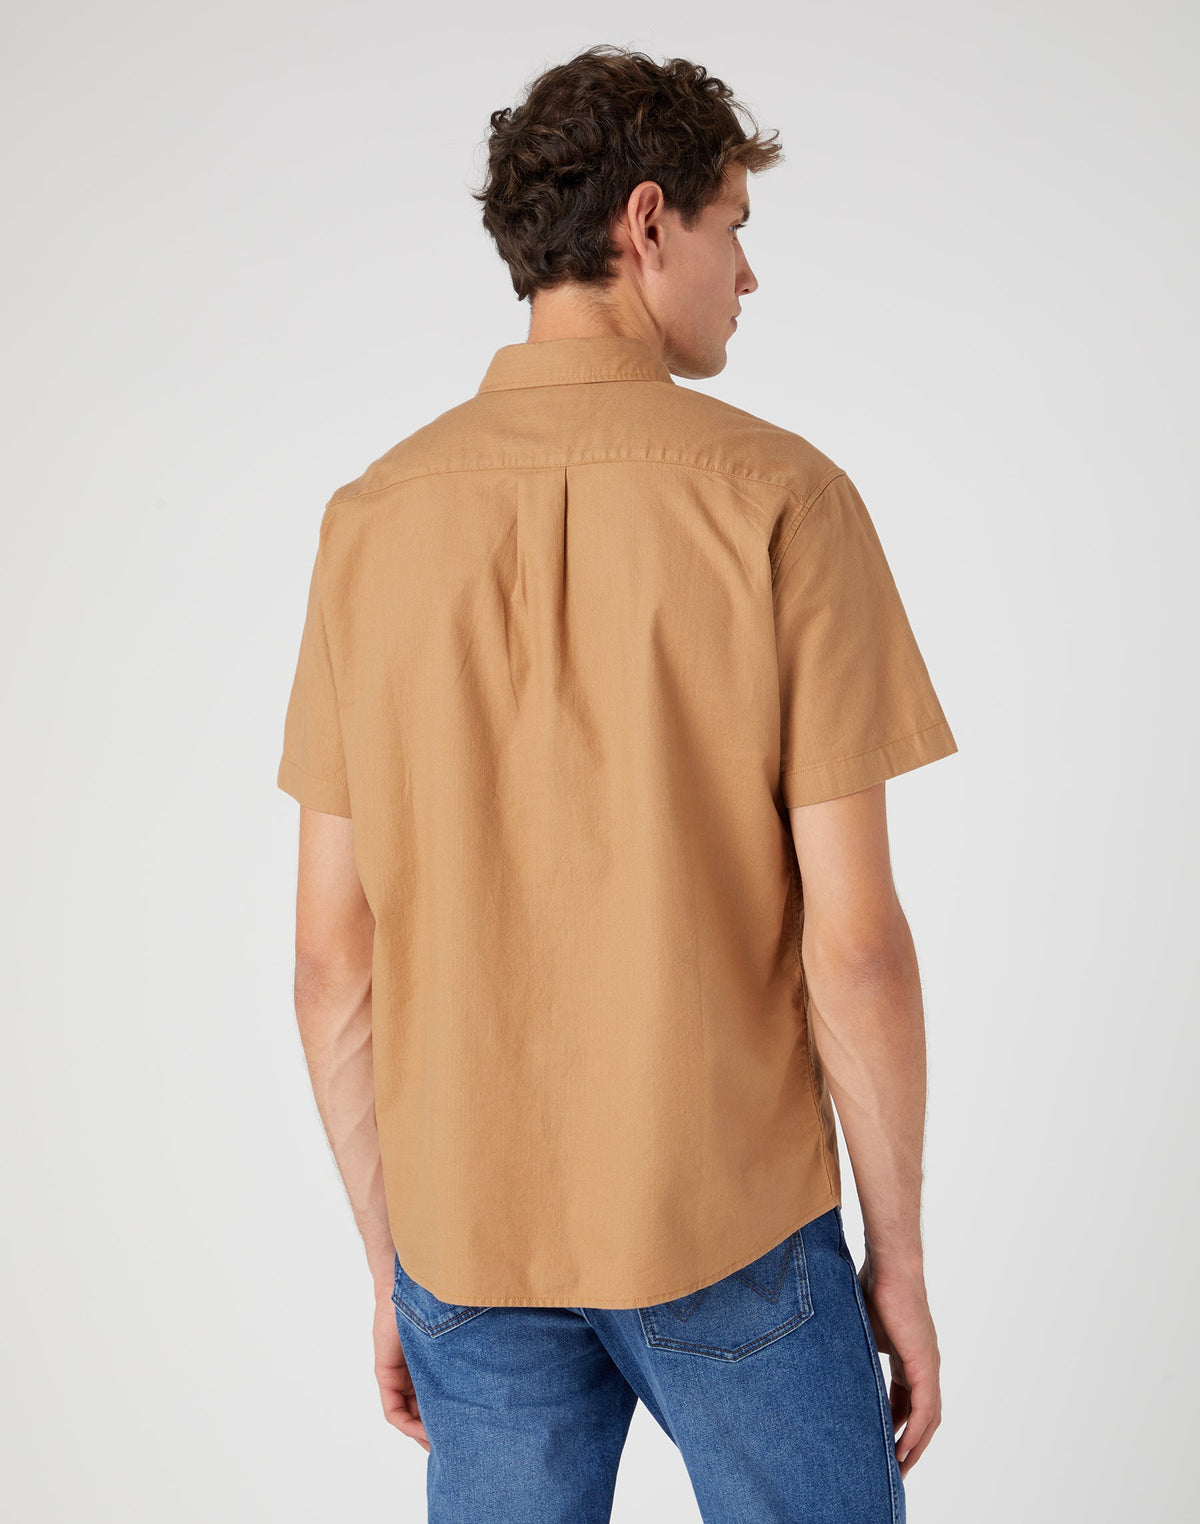 Kurzarm One Pocket Shirt in Tobacco Brown